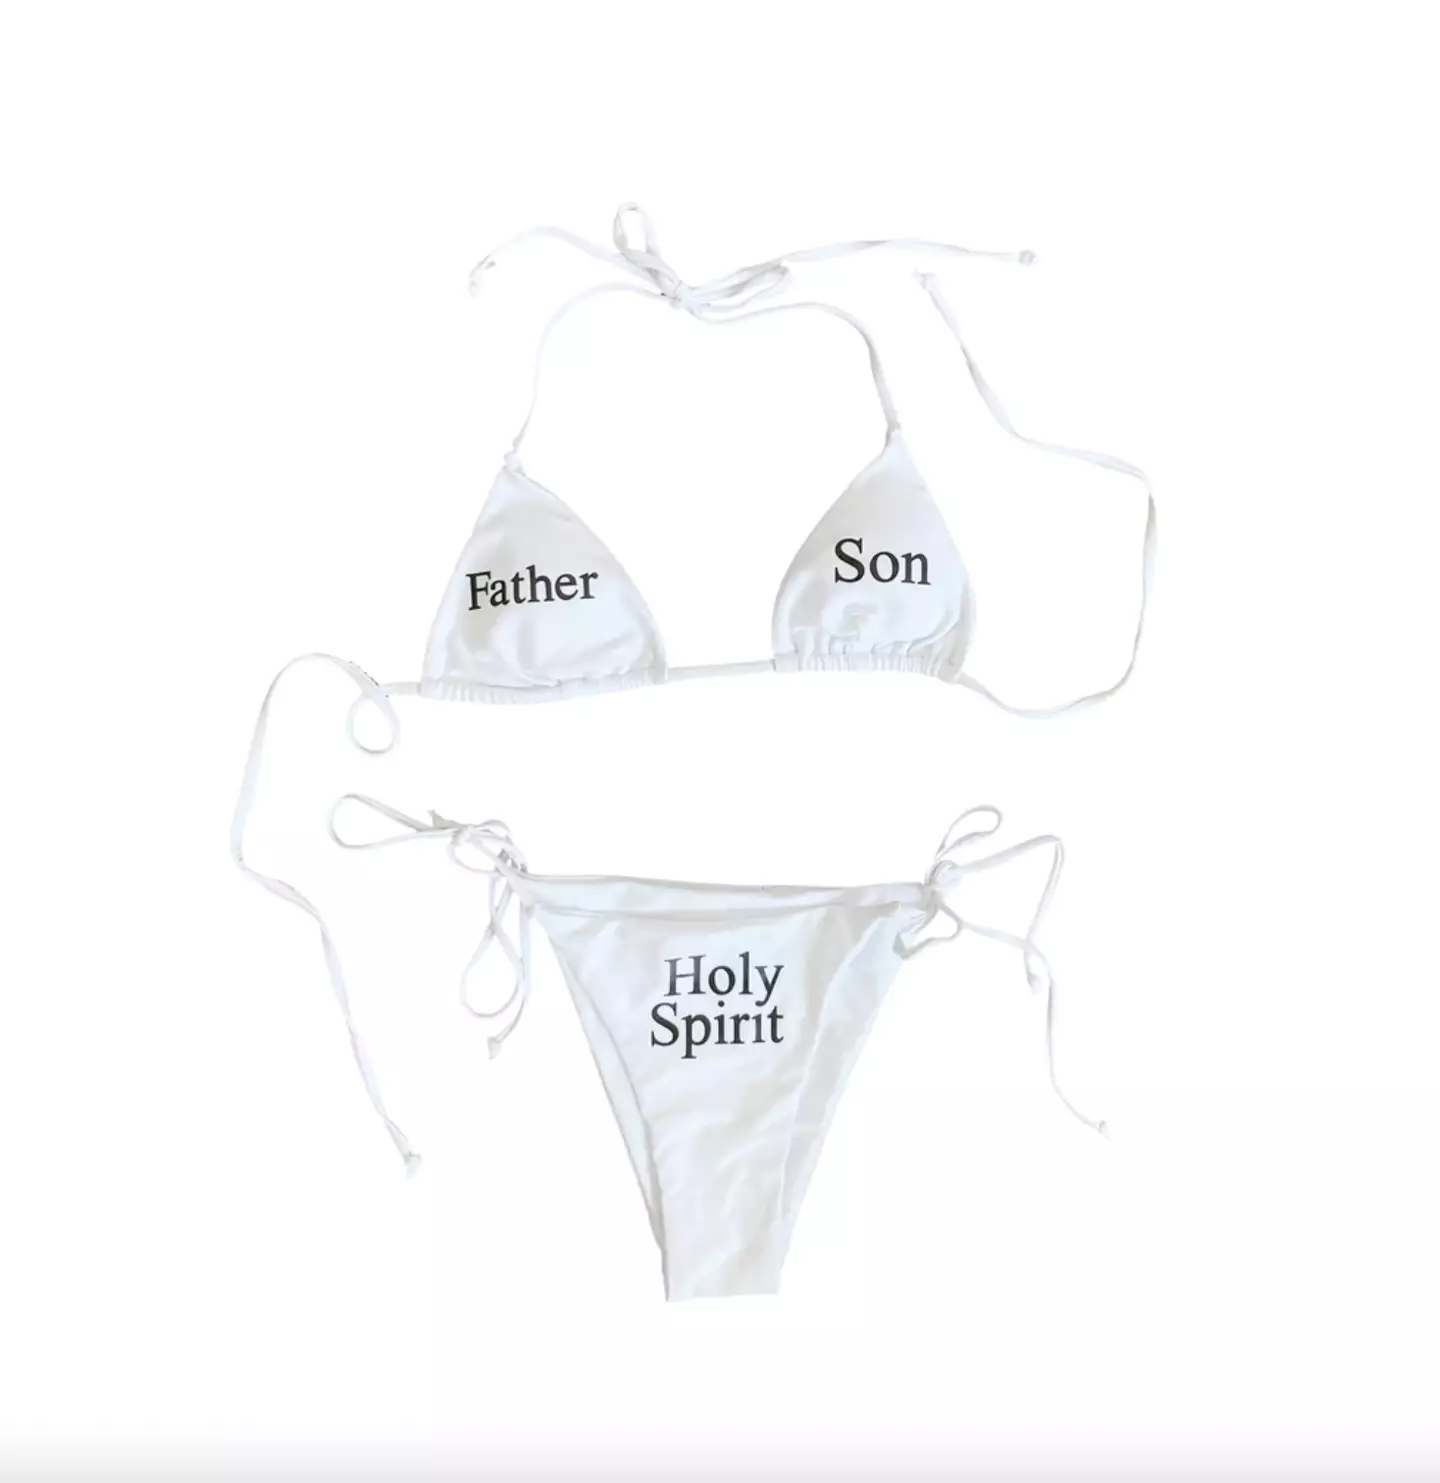 Many have found the Holy Trinity bikini offensive.